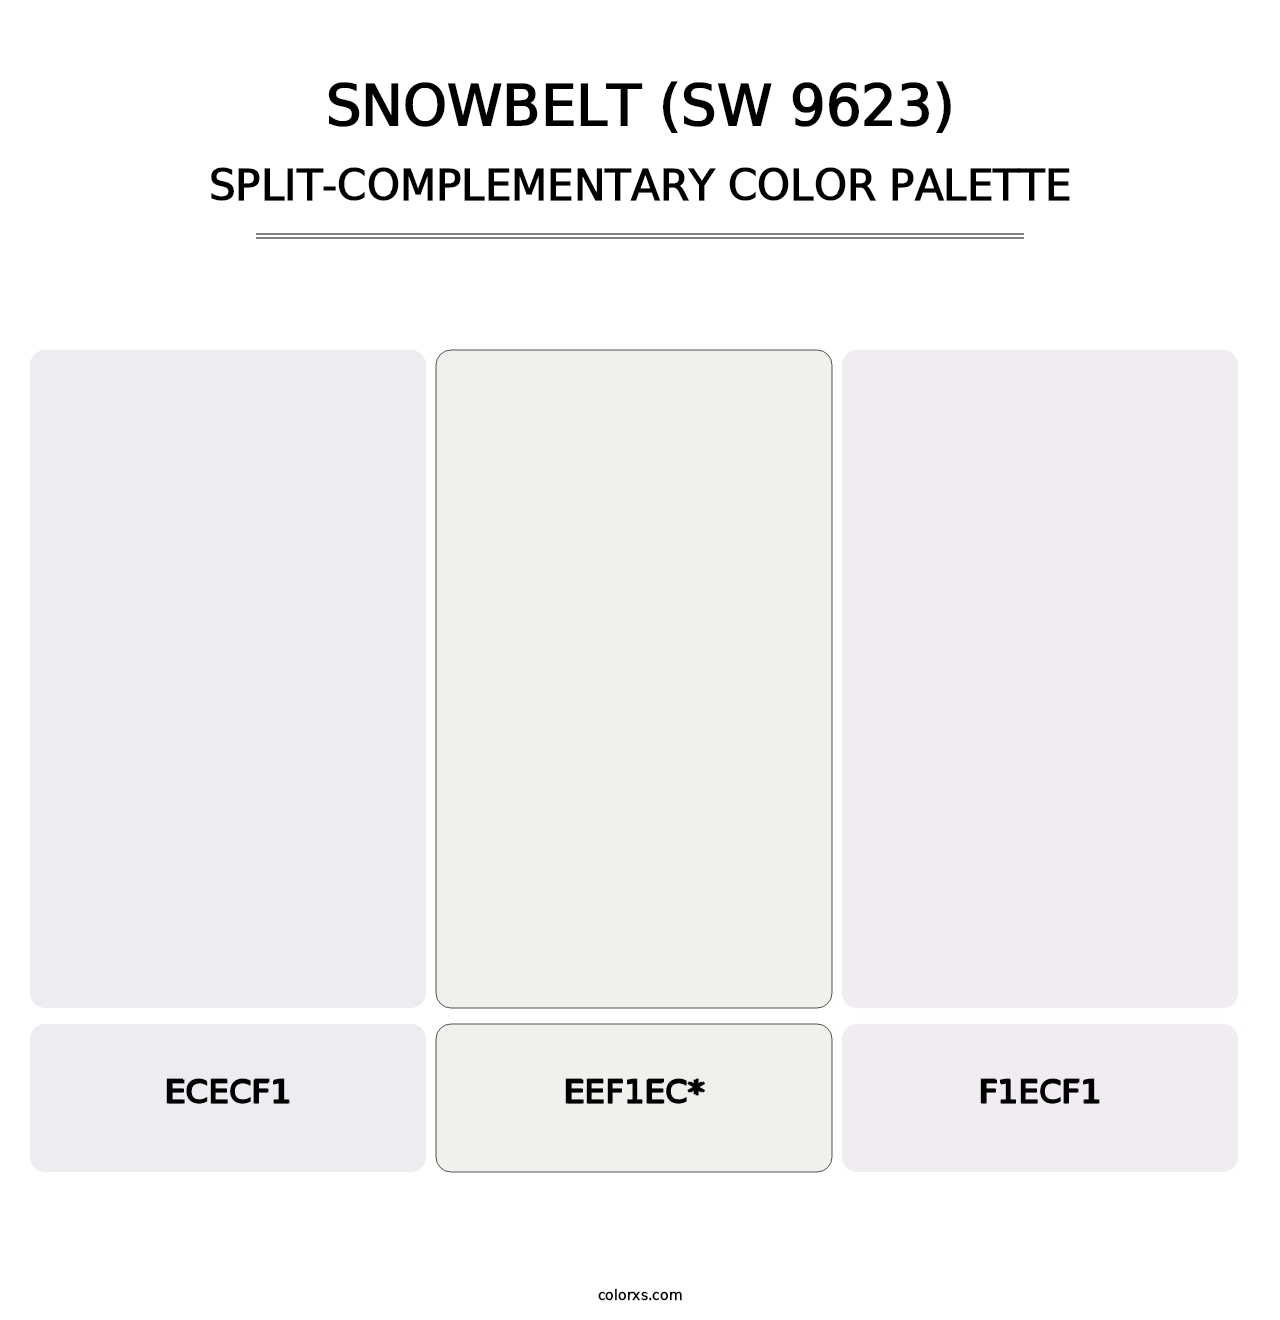 Snowbelt (SW 9623) - Split-Complementary Color Palette